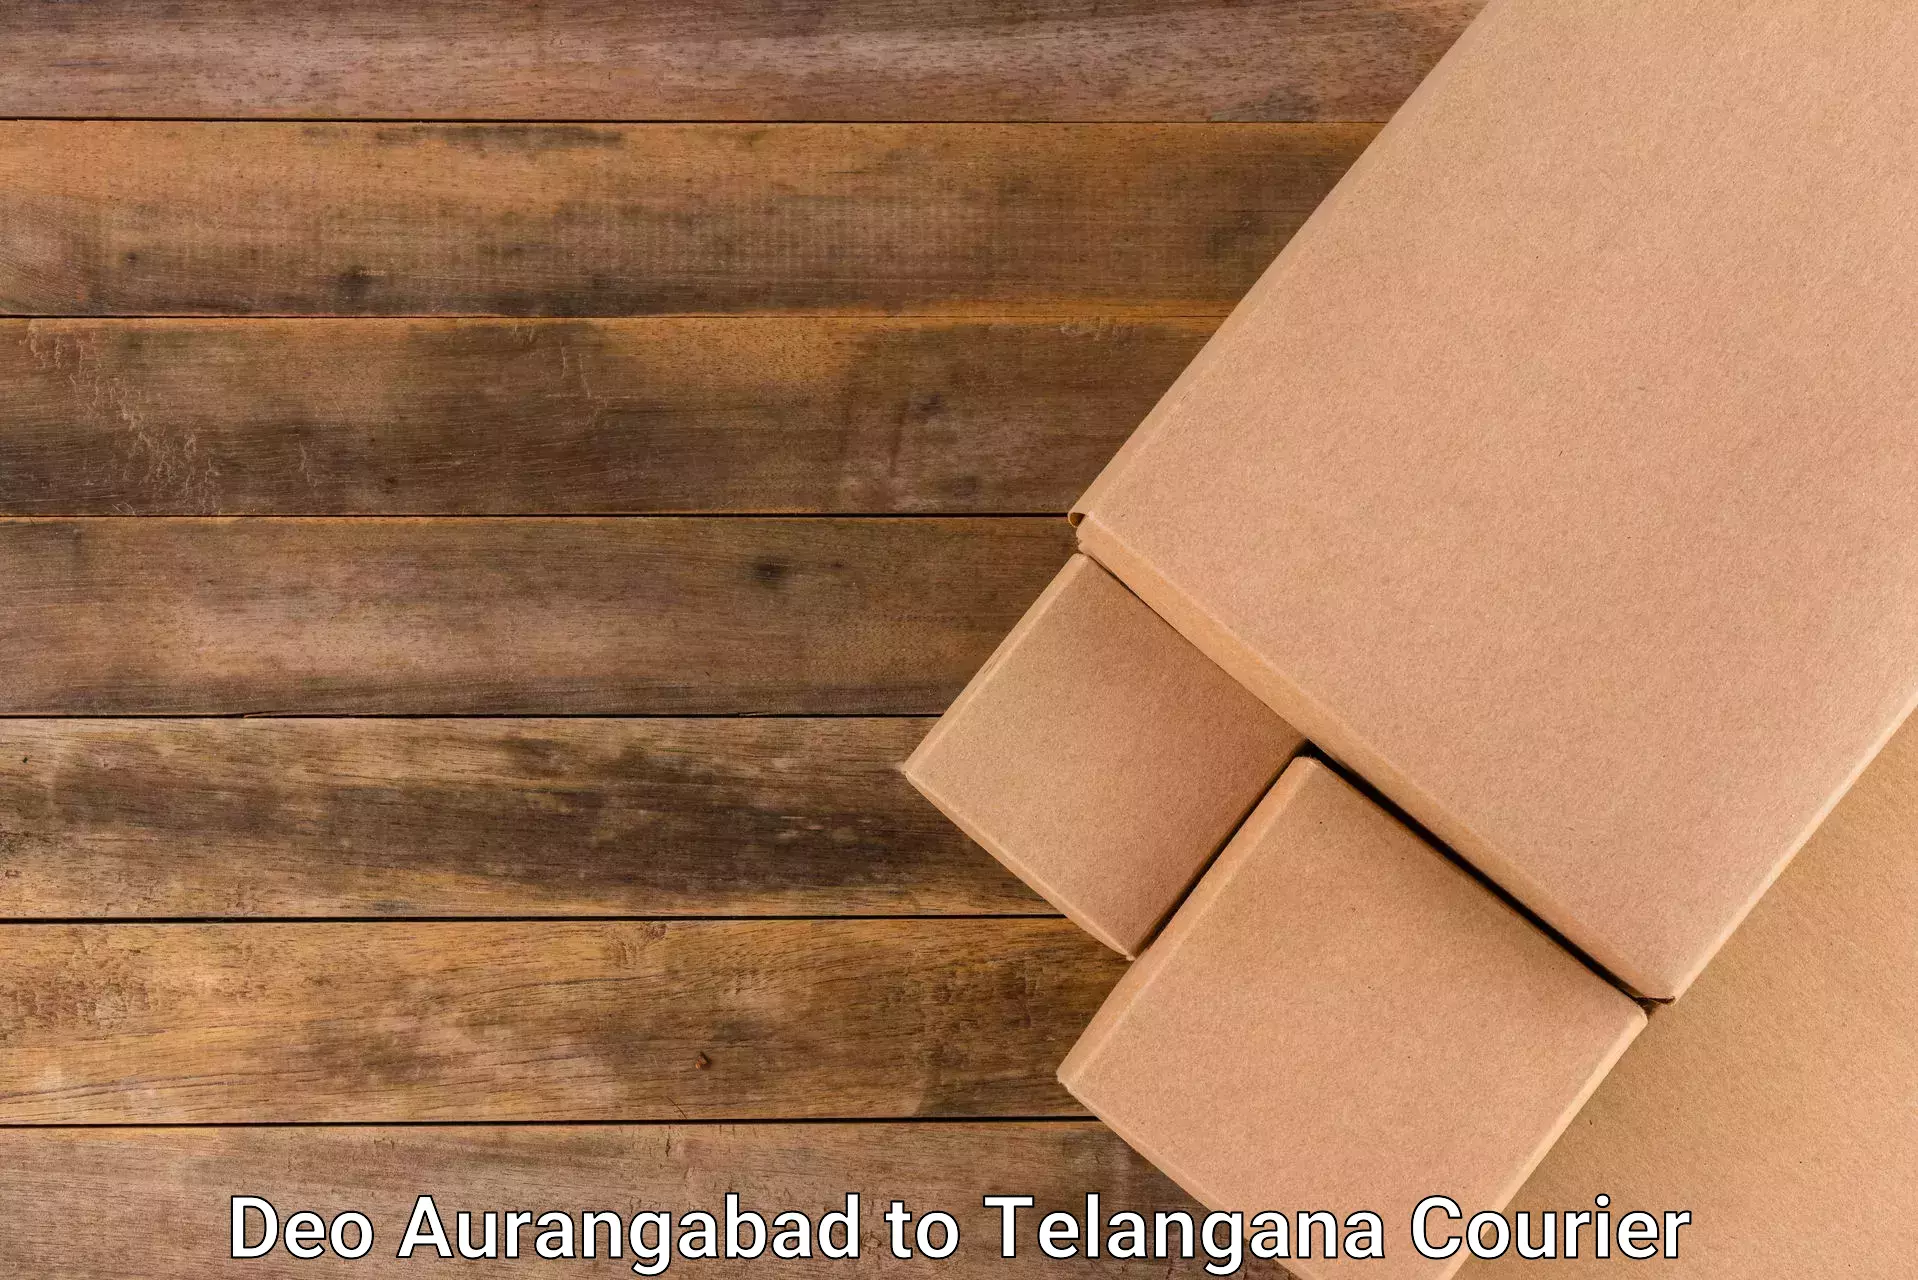 On-call courier service Deo Aurangabad to Bhupalpally